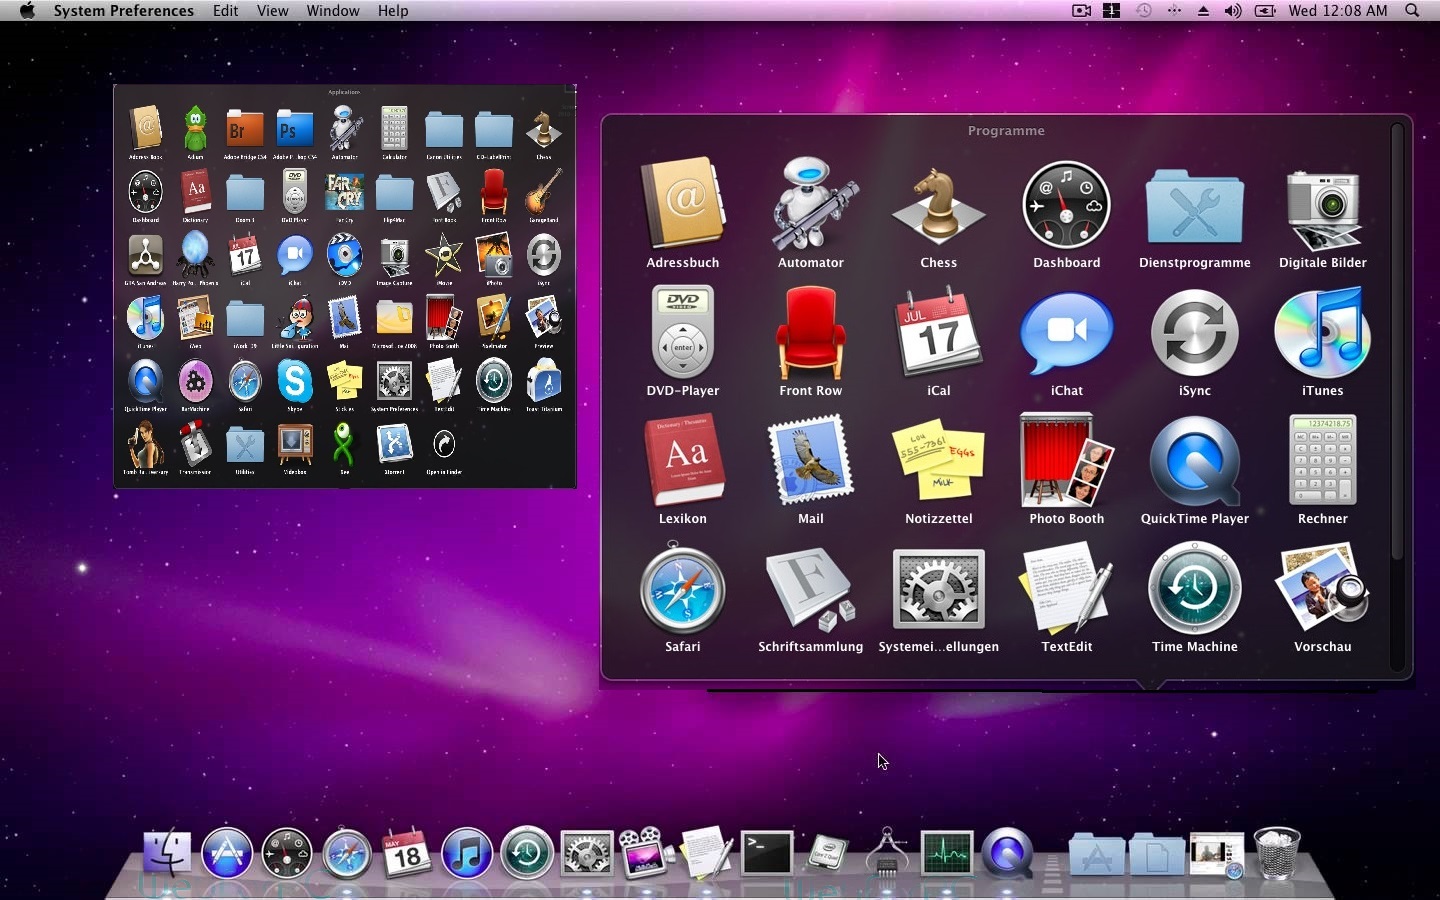 emulator for mac 10.6.8